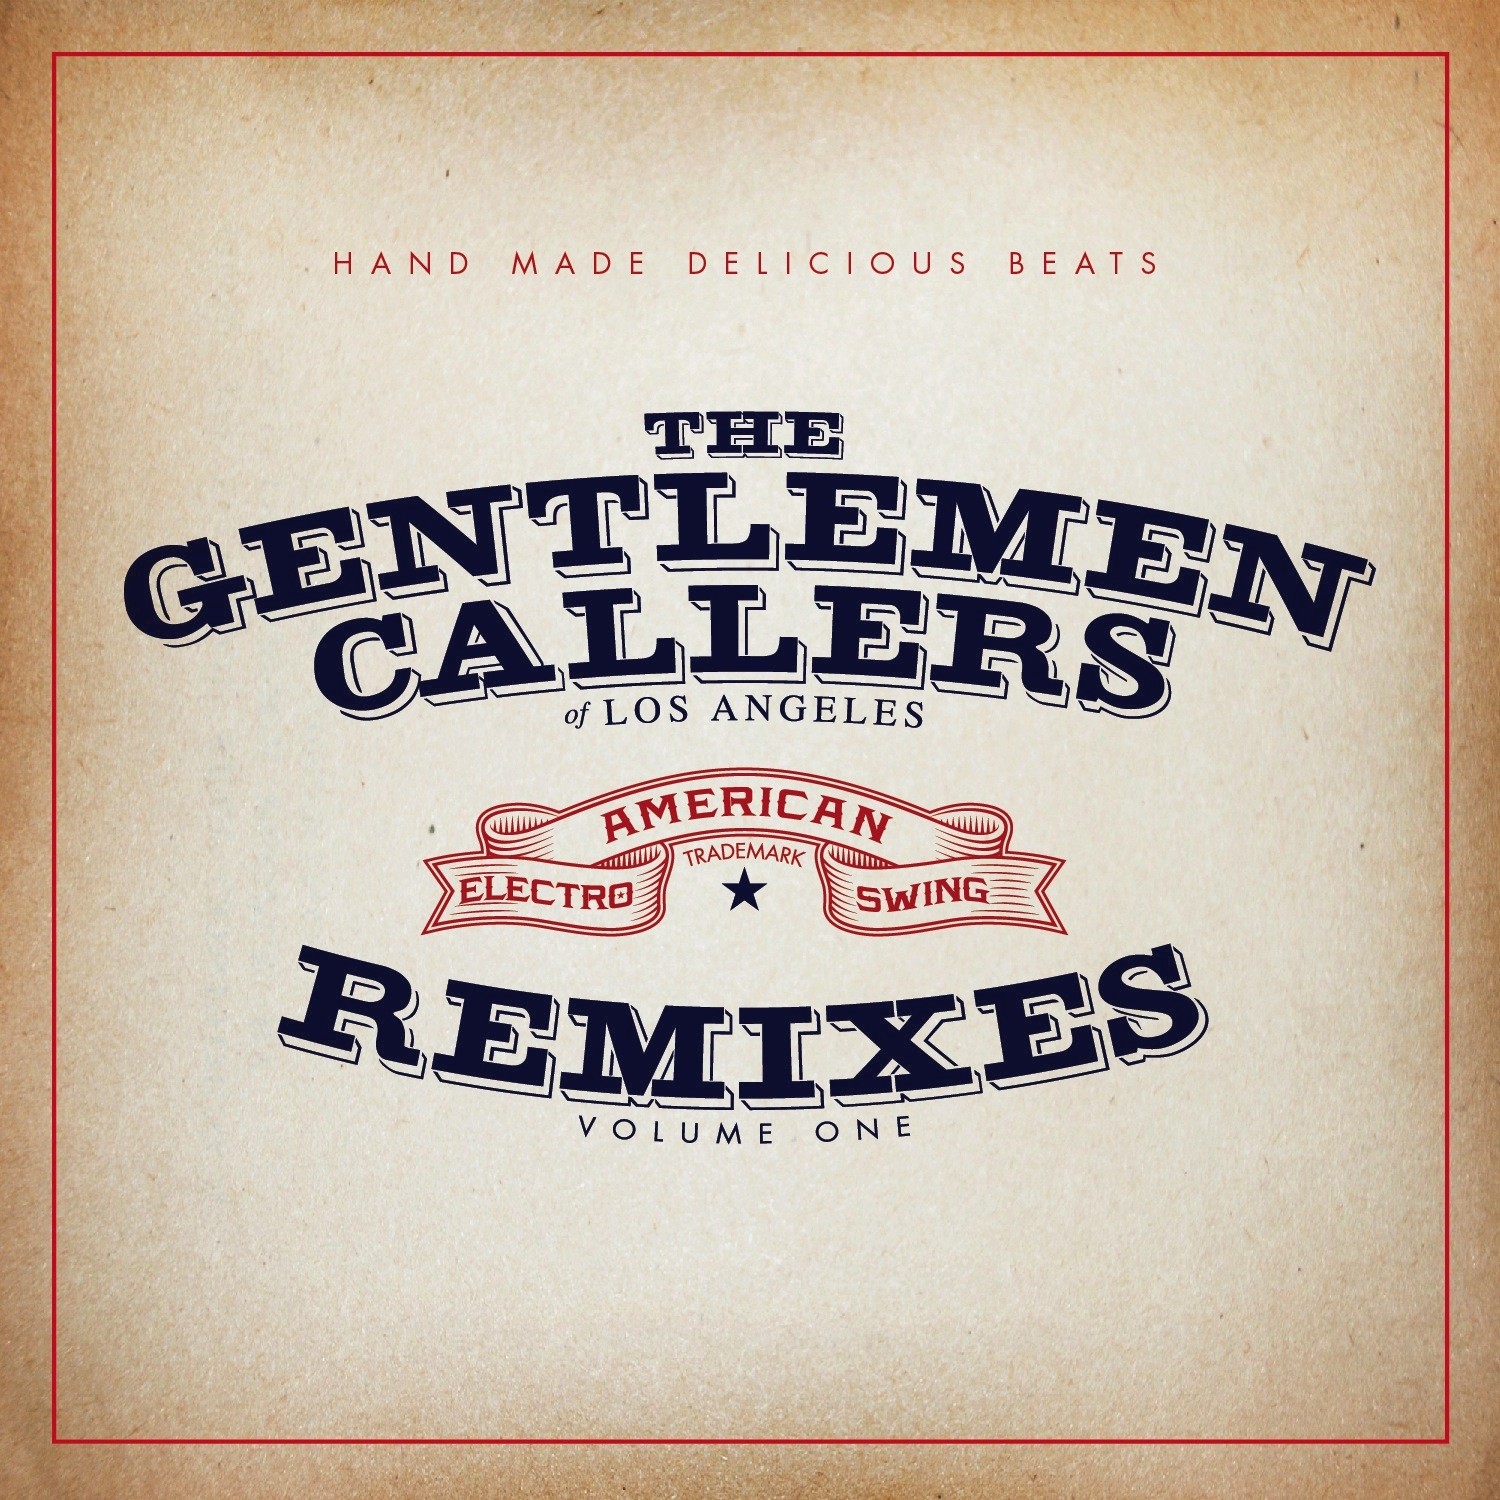 Swing as **** (The Gentlemen Callers of Los Angeles Remix Heavy as **** Remix)